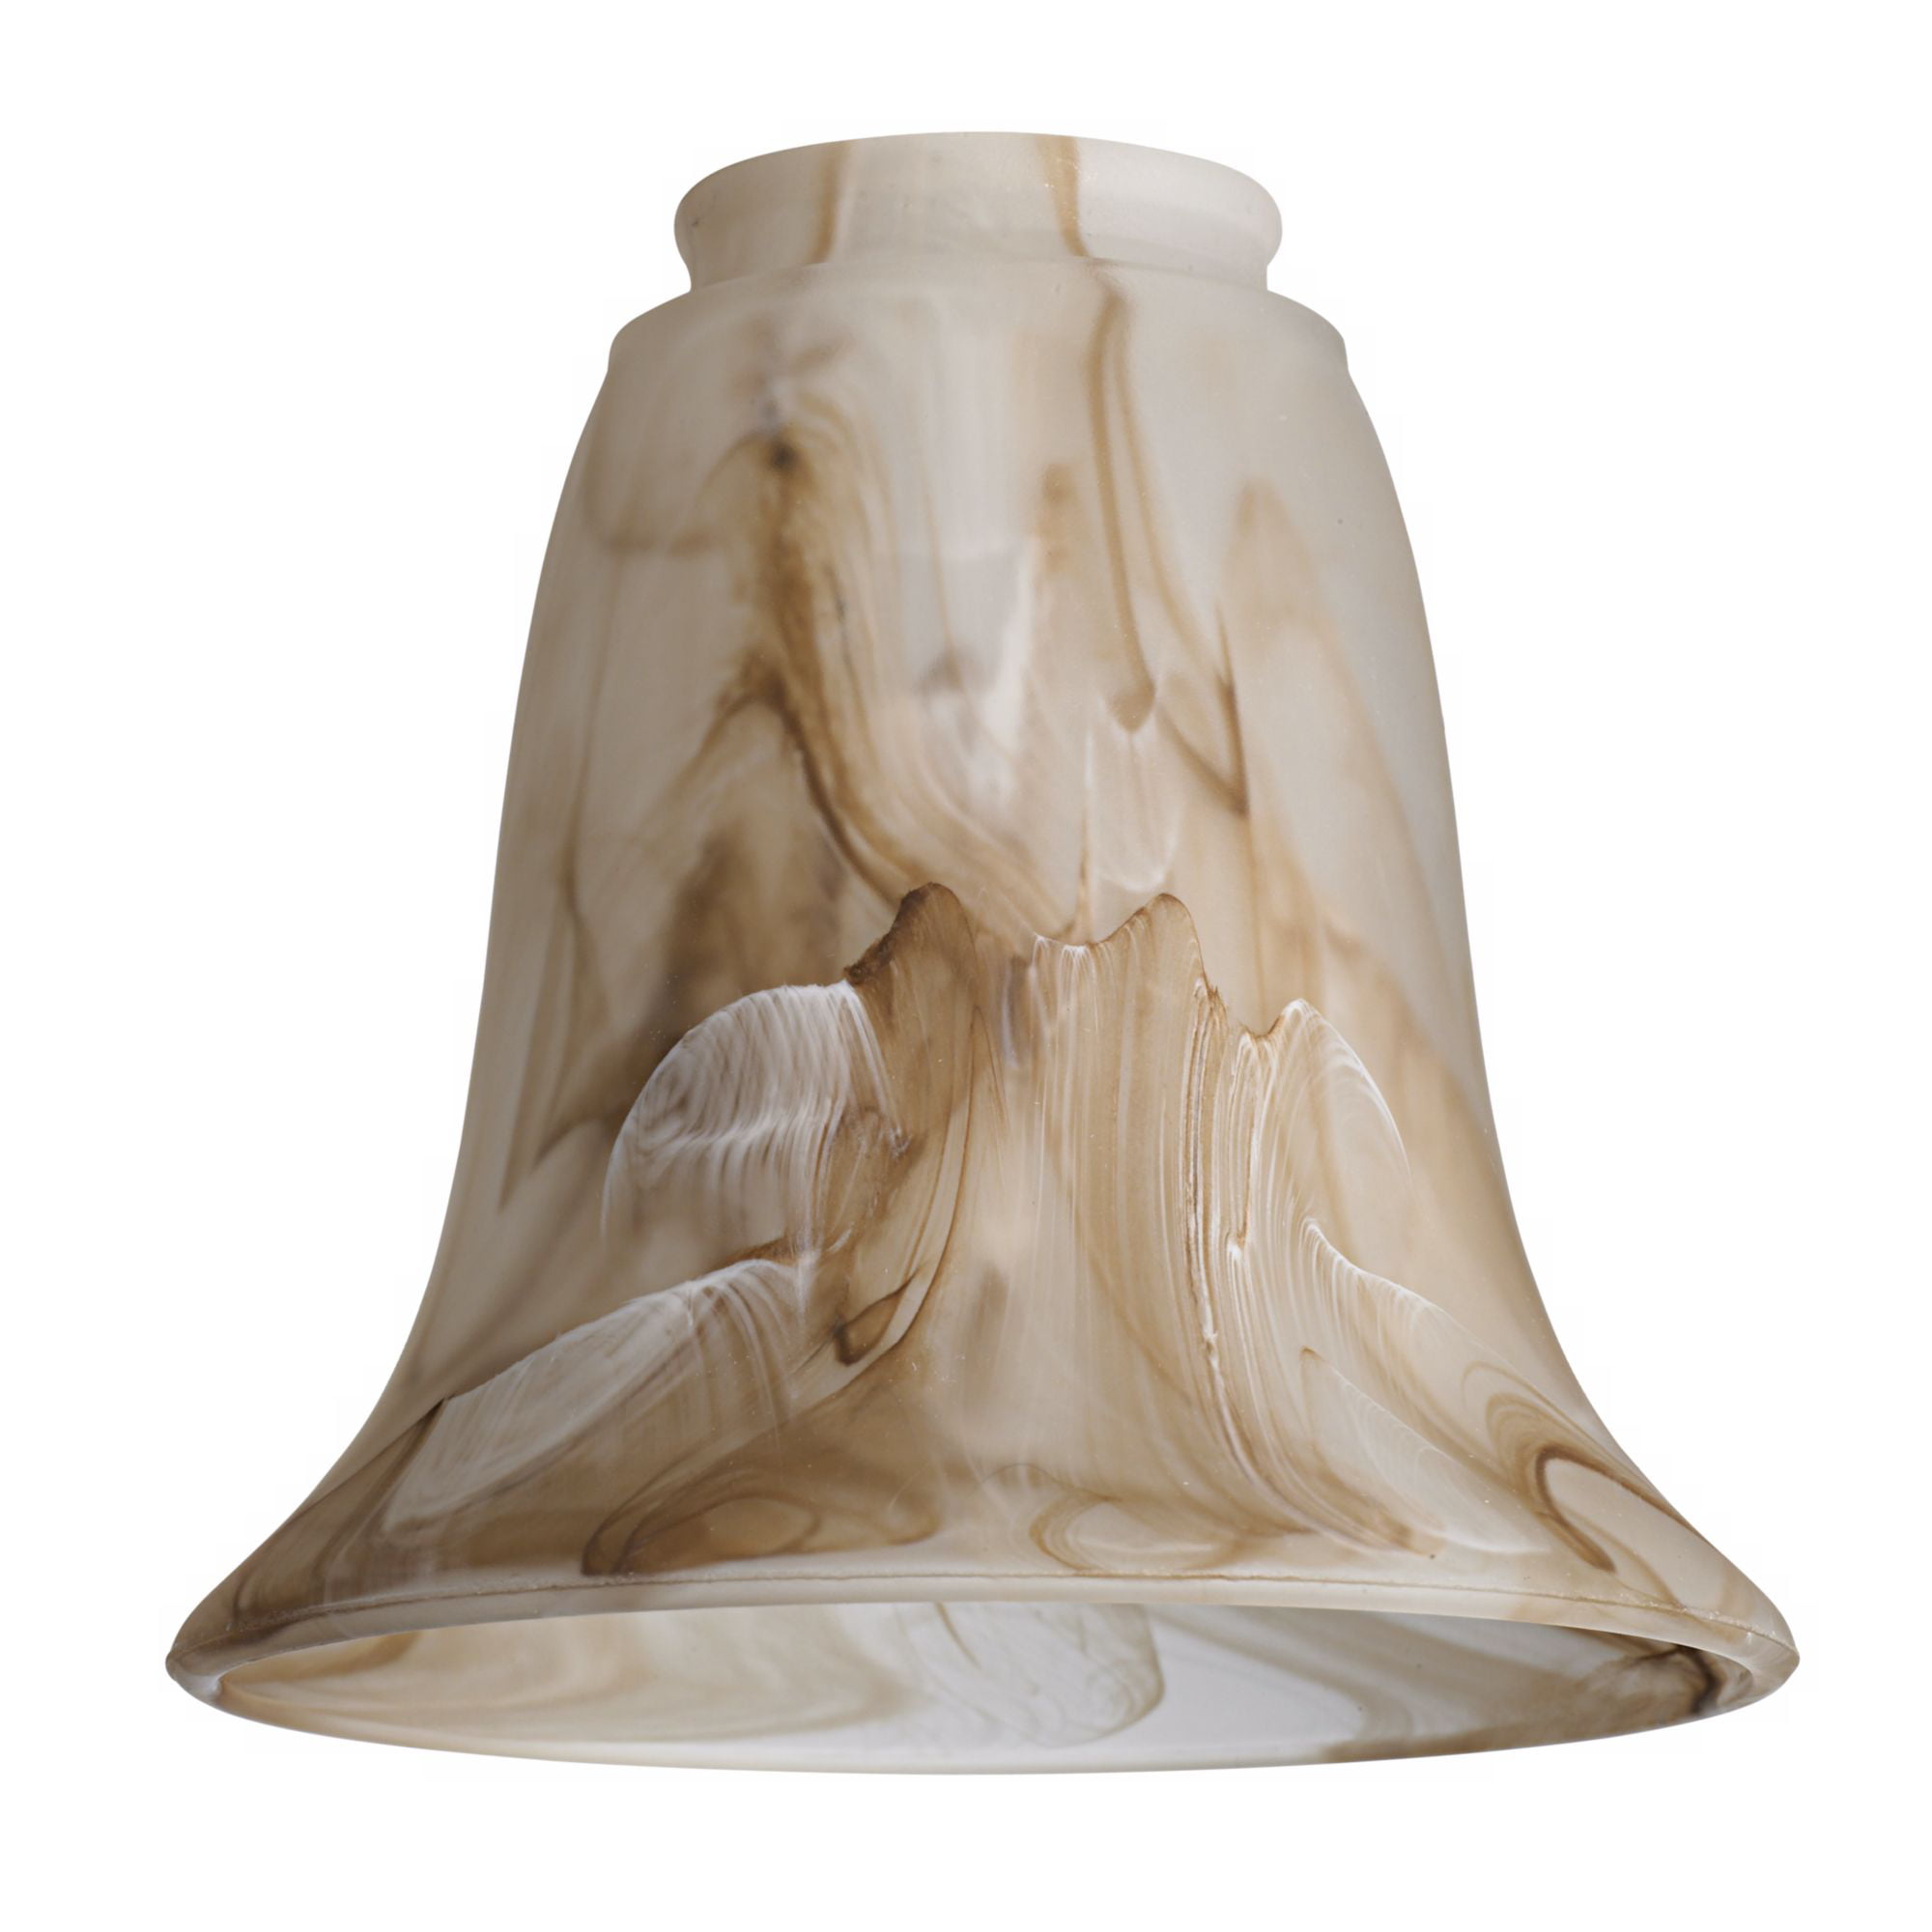 Marbleized Bronze Glass Bell Shade 2 1/4" Fitter for Ceiling Fan Light